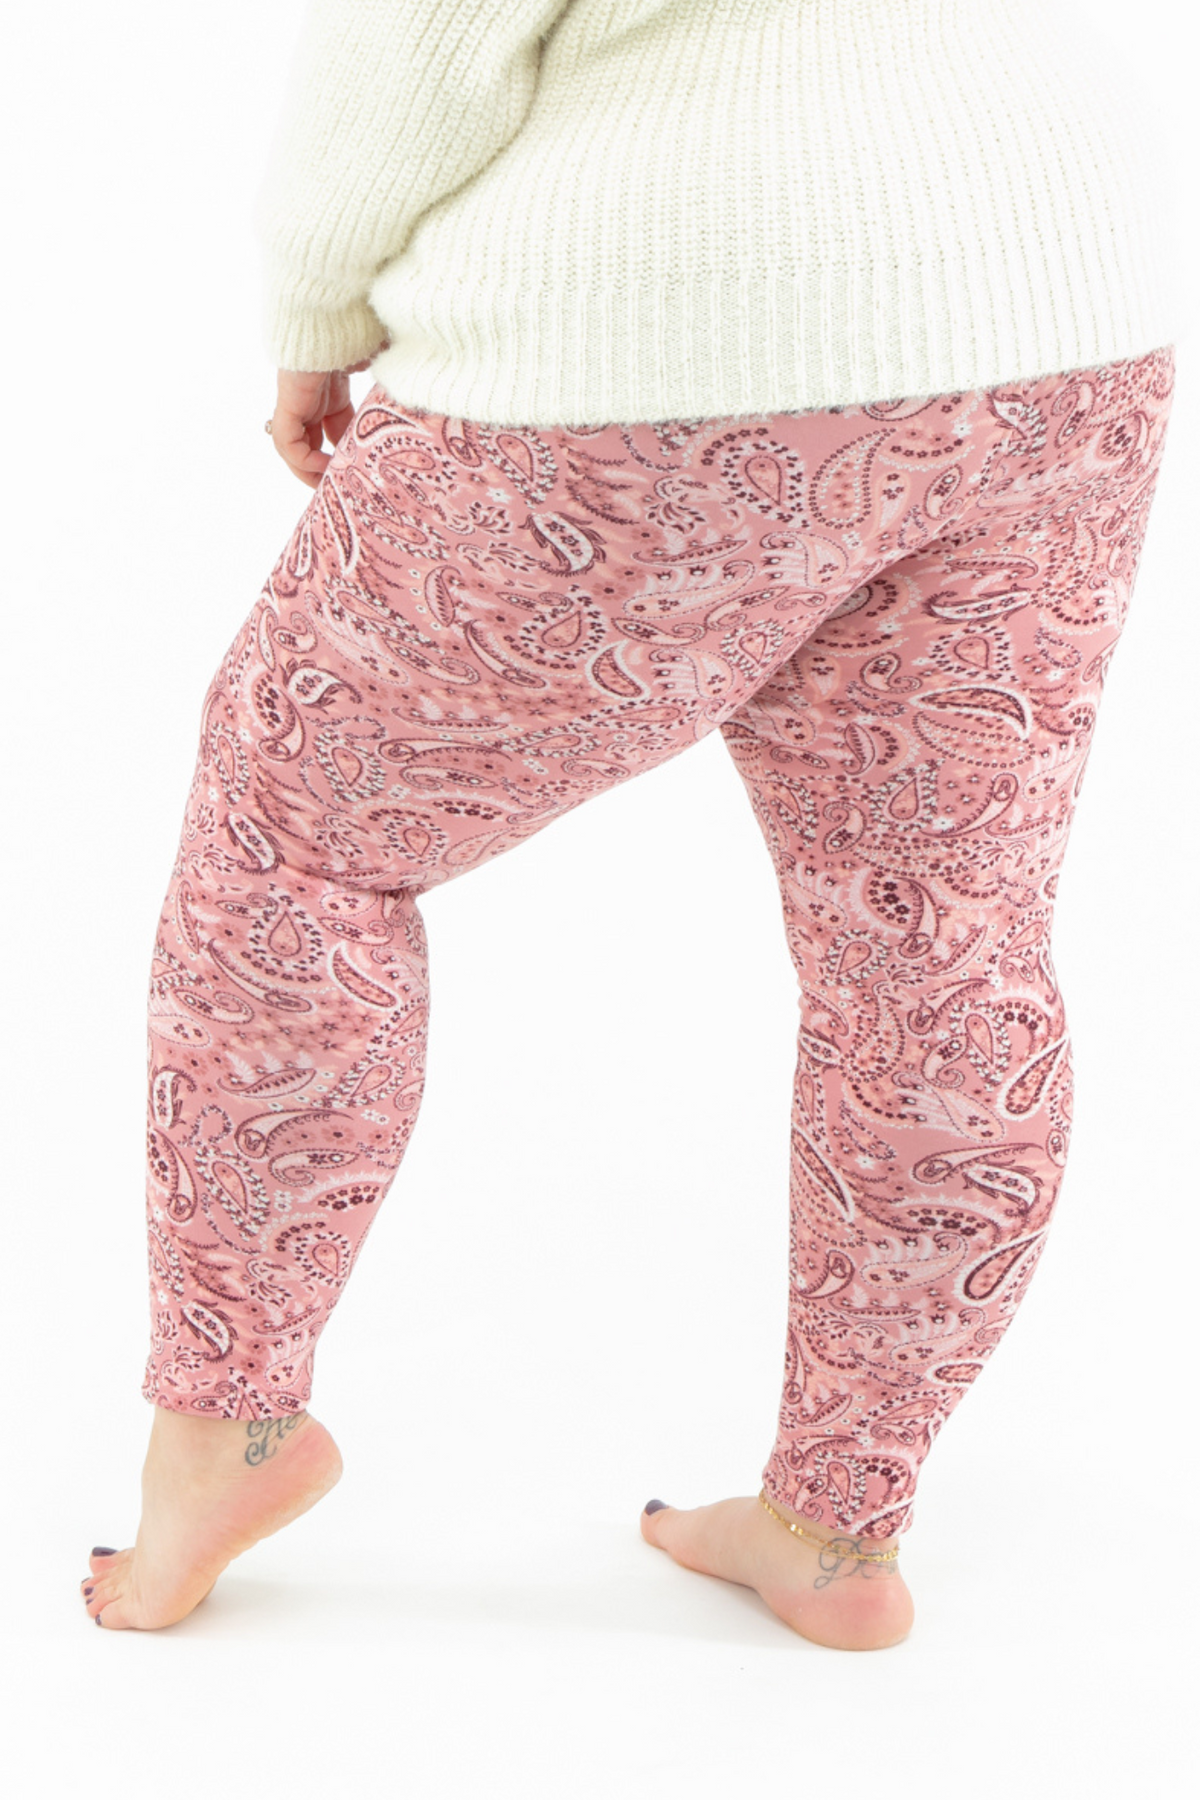 ASOS DESIGN Petite exclusive legging in pink floral print